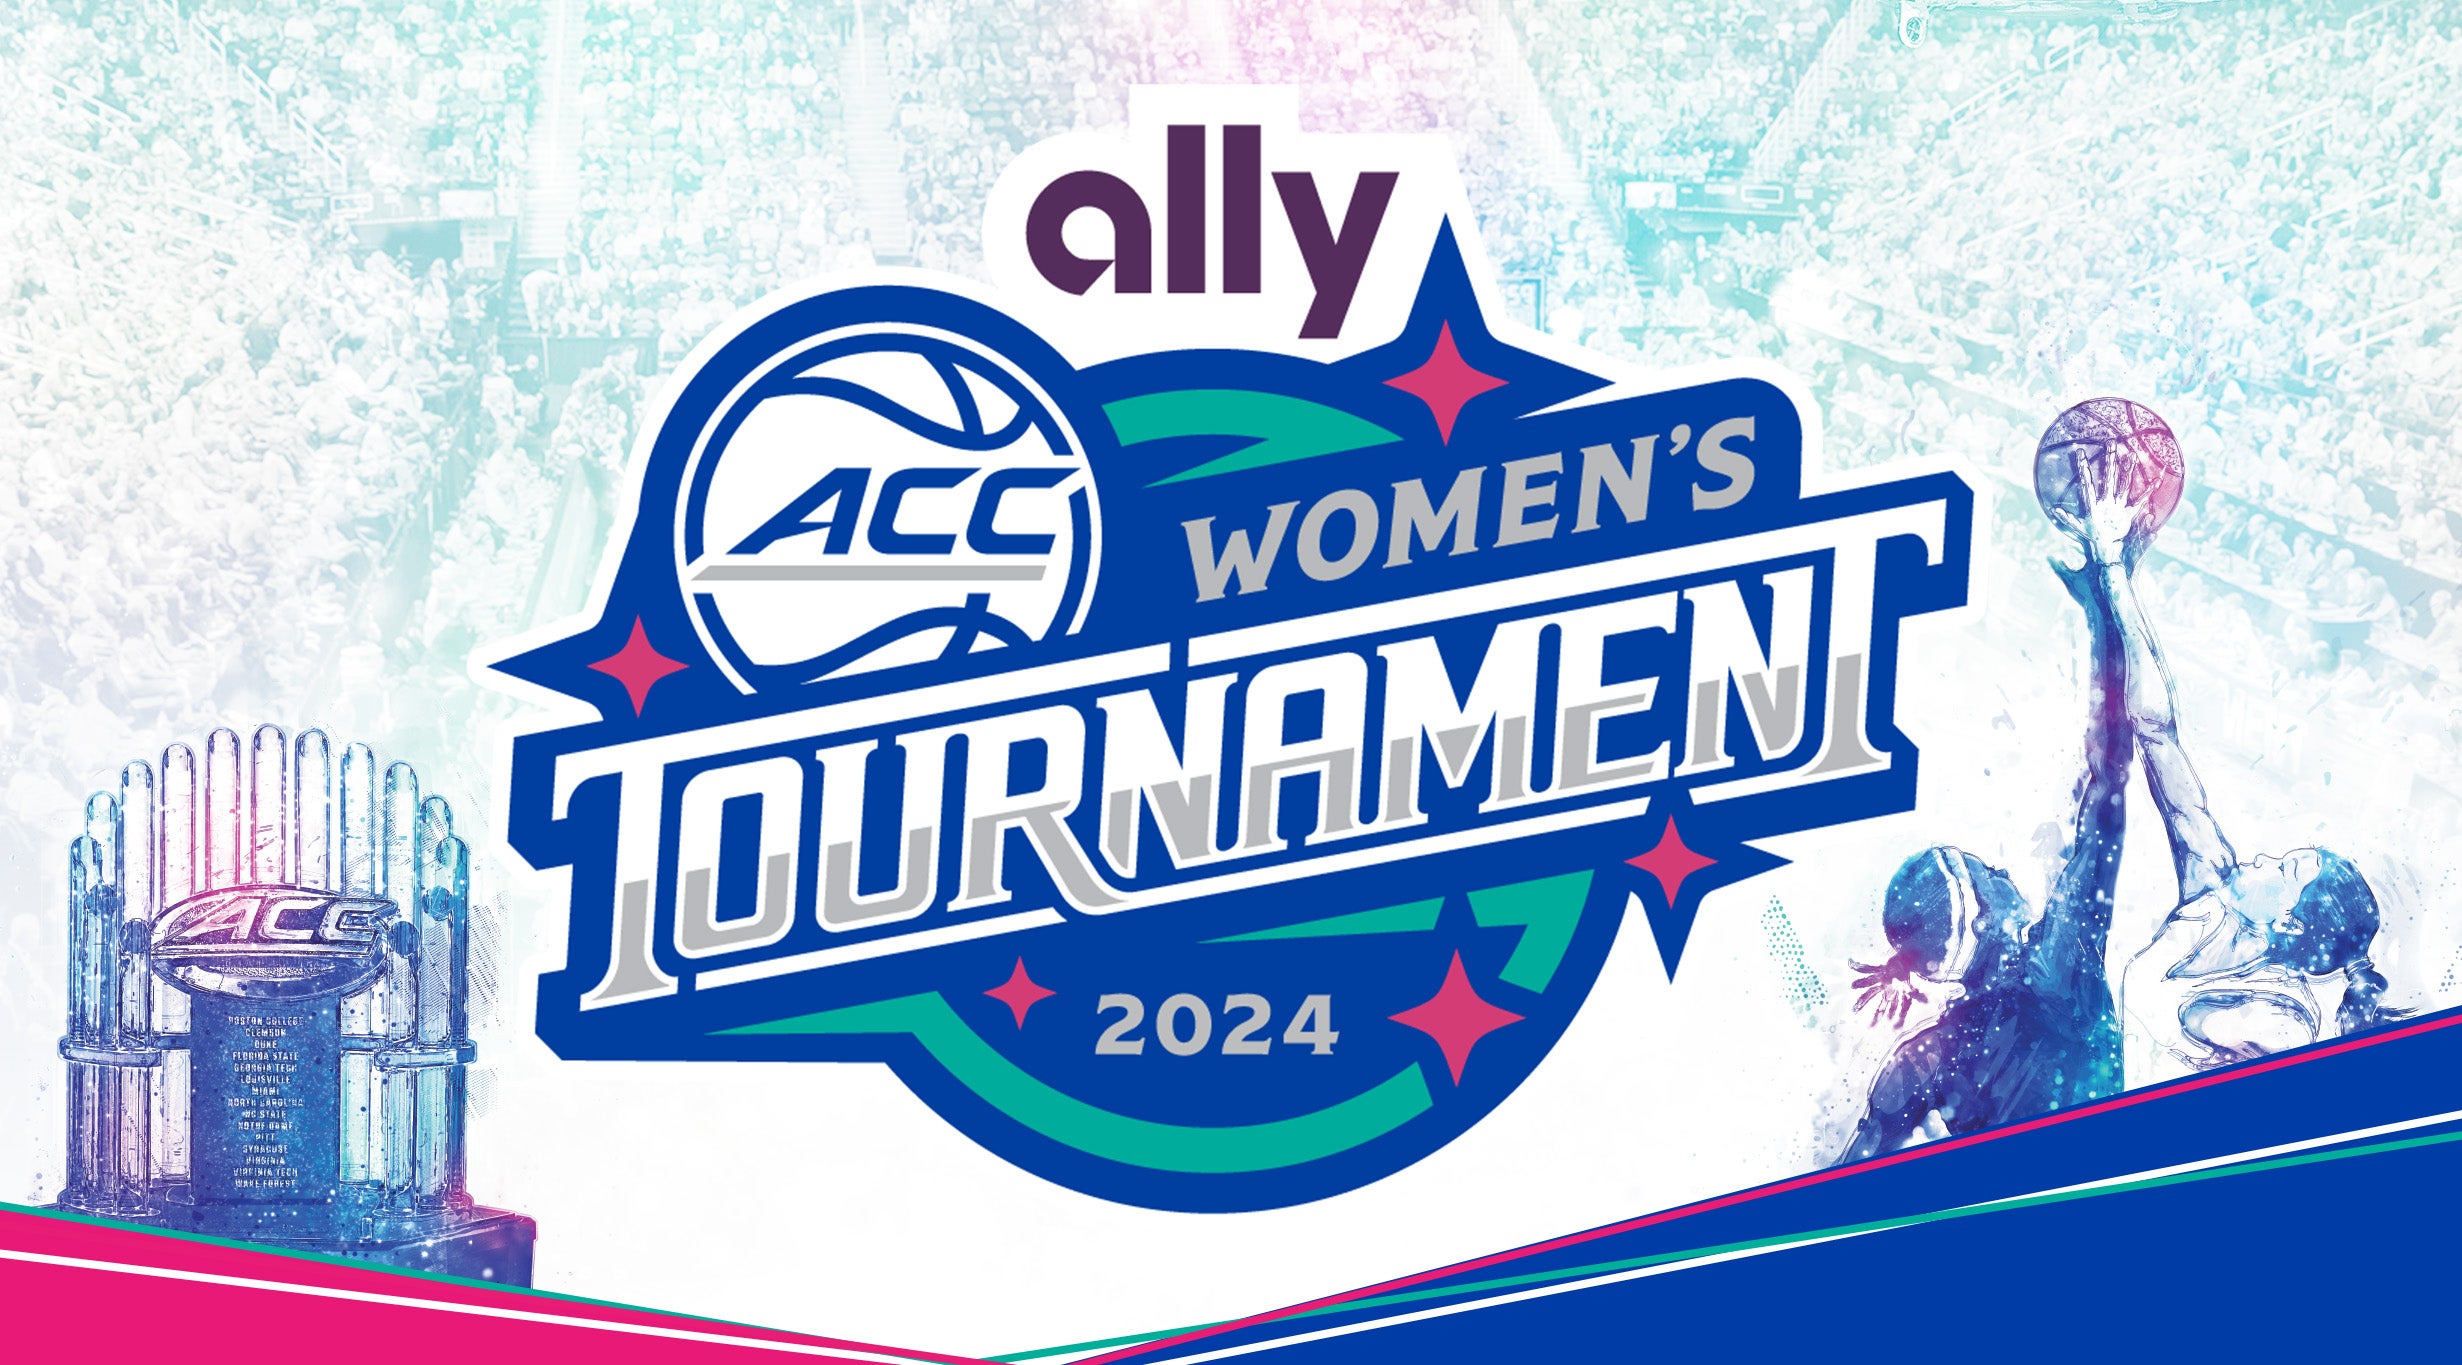 Ally ACC Womens Basketball Tournament Session 4 in Greensboro promo photo for Venue presale offer code